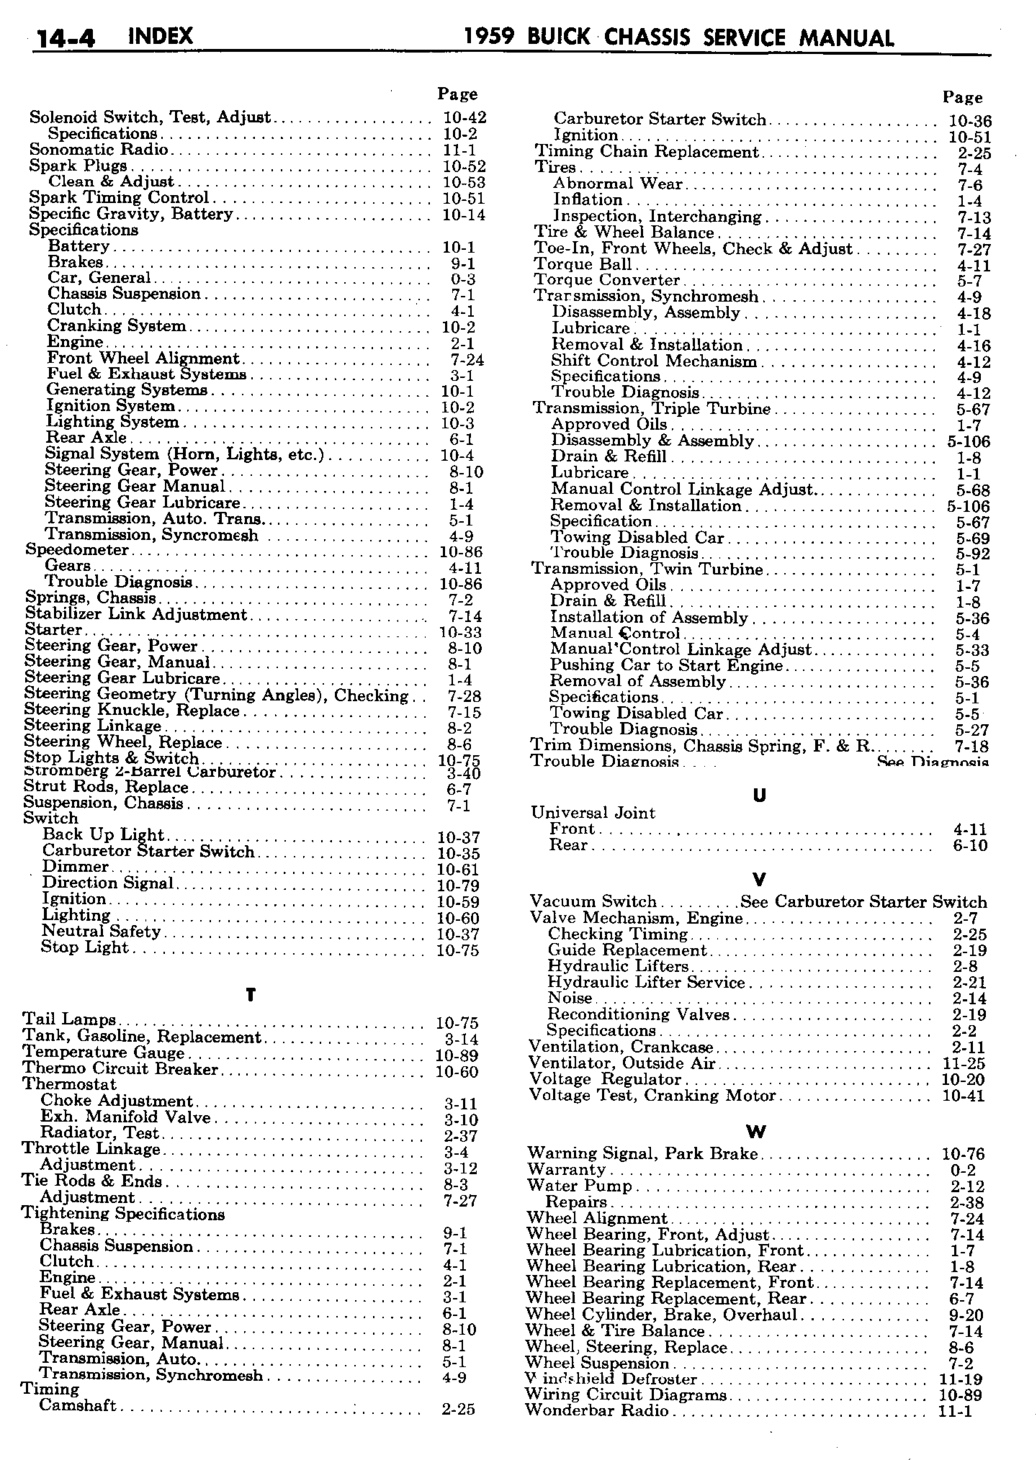 n_14 1959 Buick Shop Manual - Index-004-004.jpg